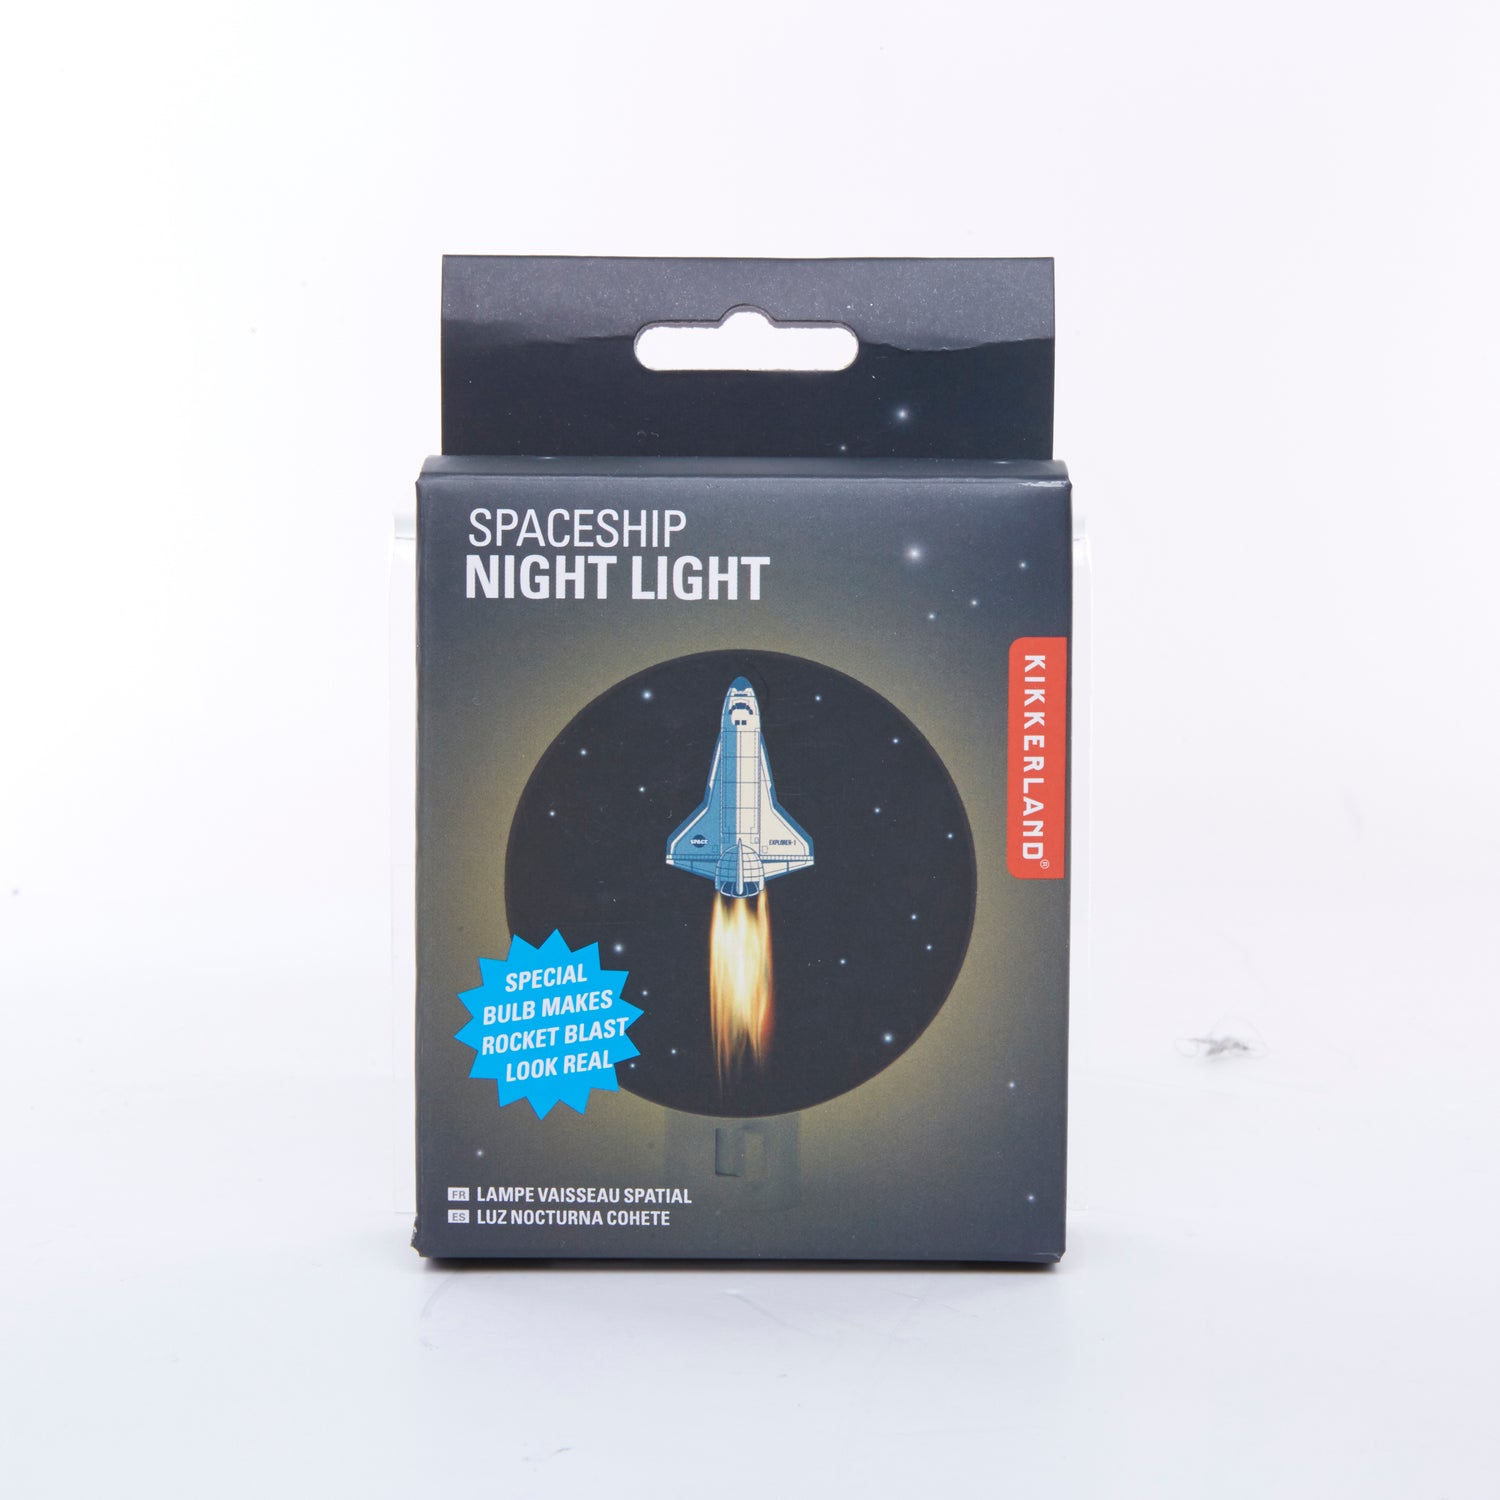 Spaceship Nightlight